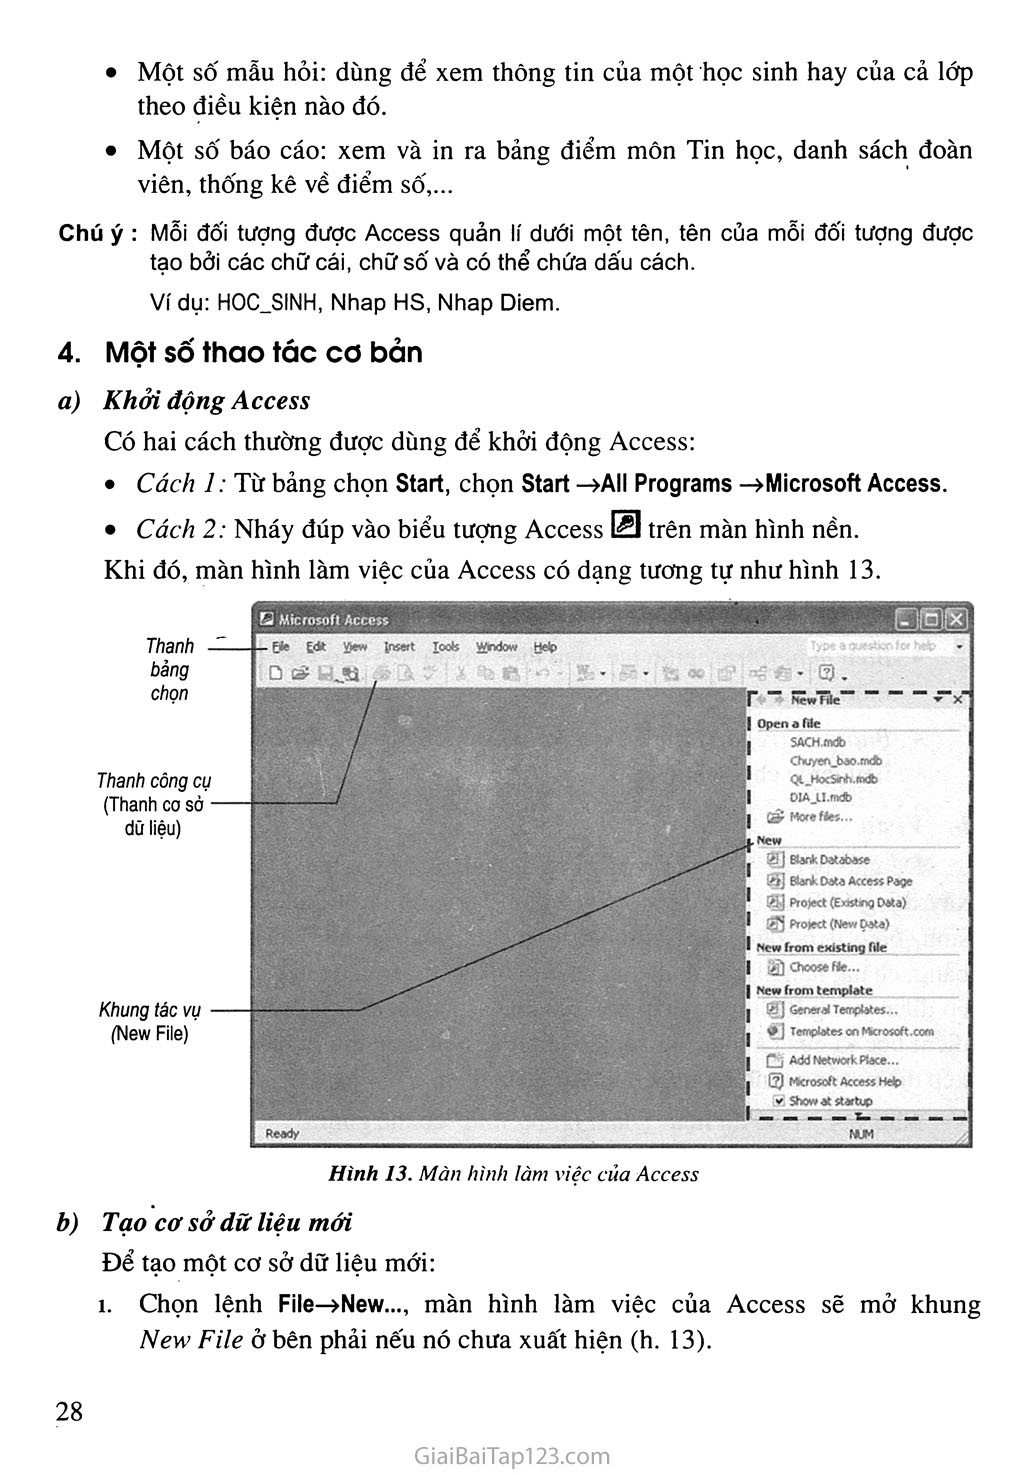 §3. Giới thiệu Microsoft Access trang 4